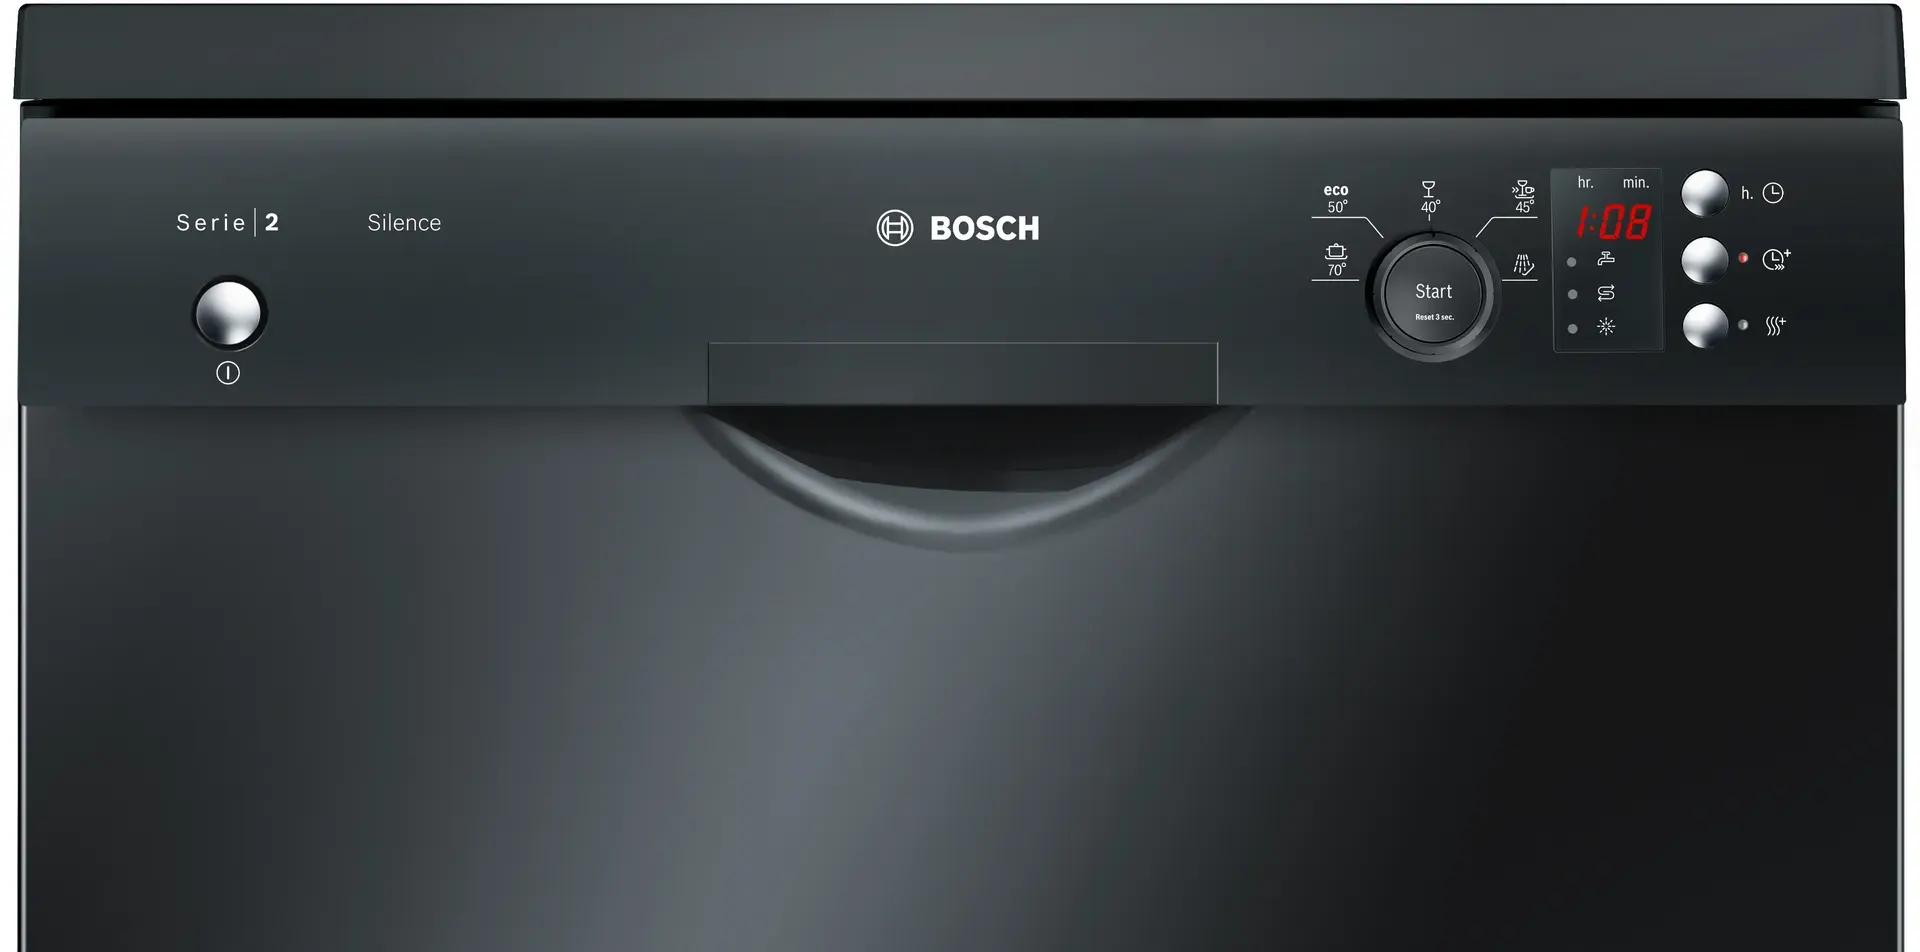 Bosch series 2 silence. Посудомойка Bosch serie 2 Silence Plus. Bosch sms43d08me. Посудомойка узкая бош serie 2 Silence Plus старый выпуск. Шильдик Bosch SMS 5082.